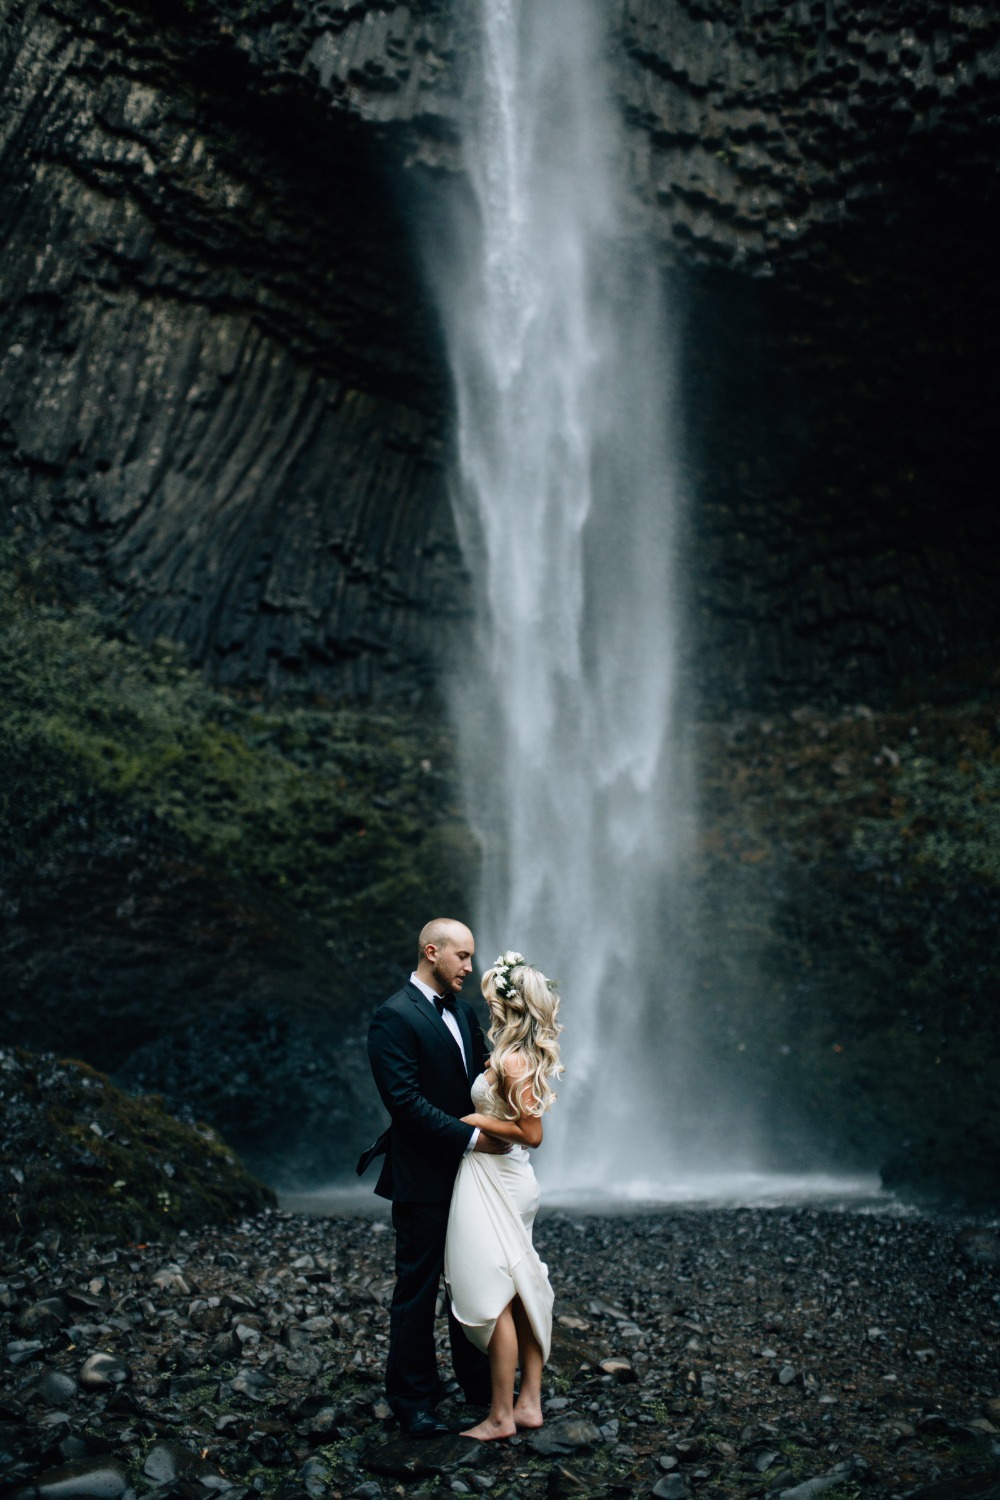 Bride and groom waterfall photo idea